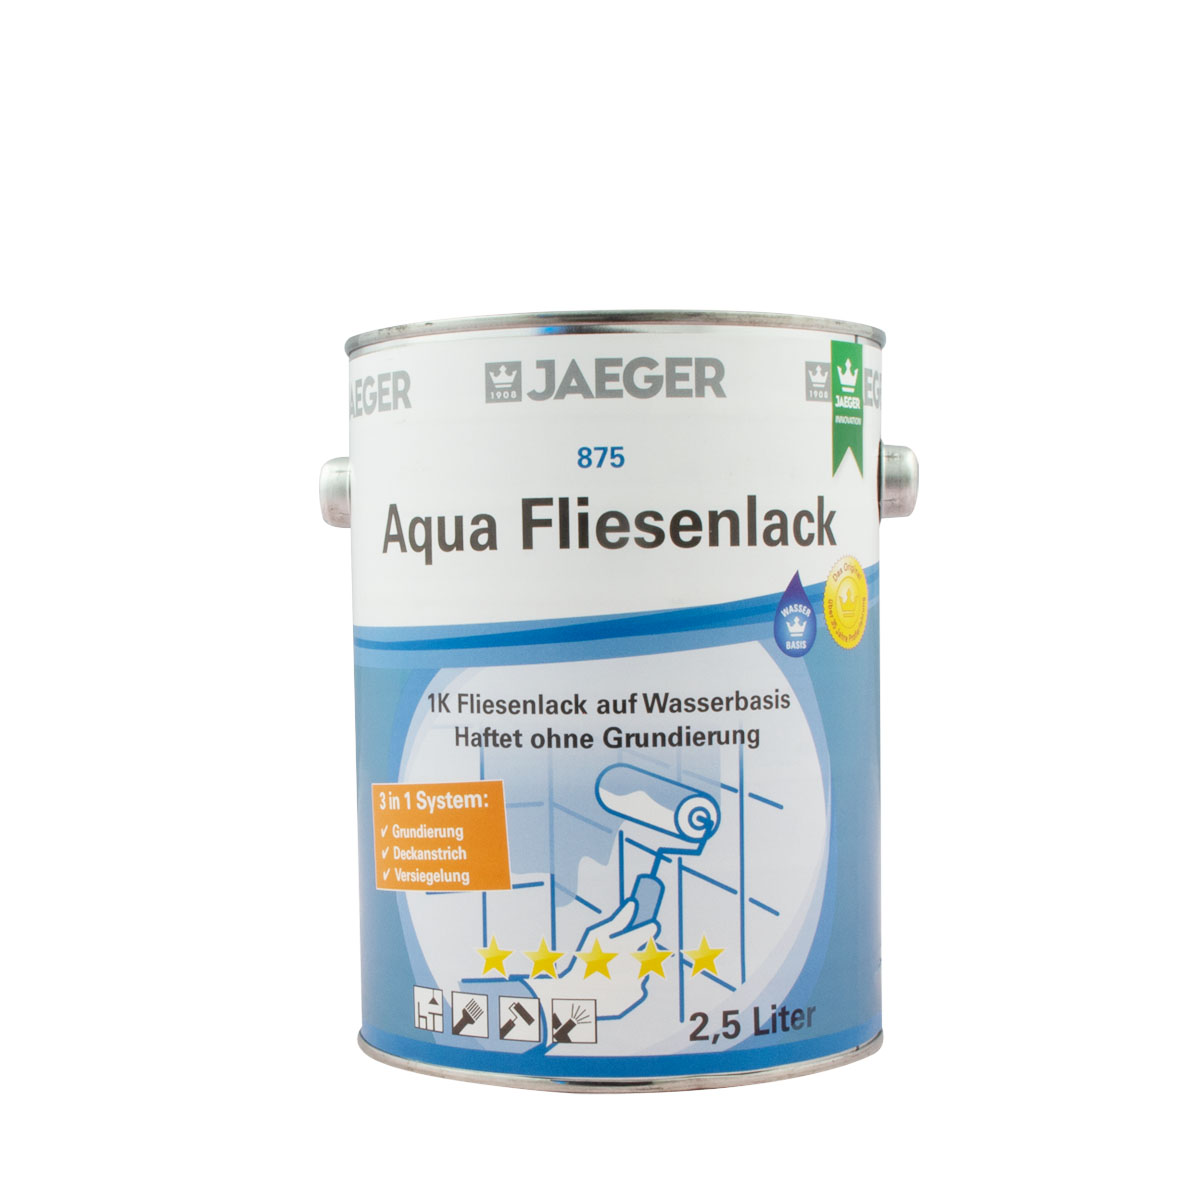 Jaeger Aqua Fliesenlack 875 neve (weiss) 2,5l, 3 in 1 System